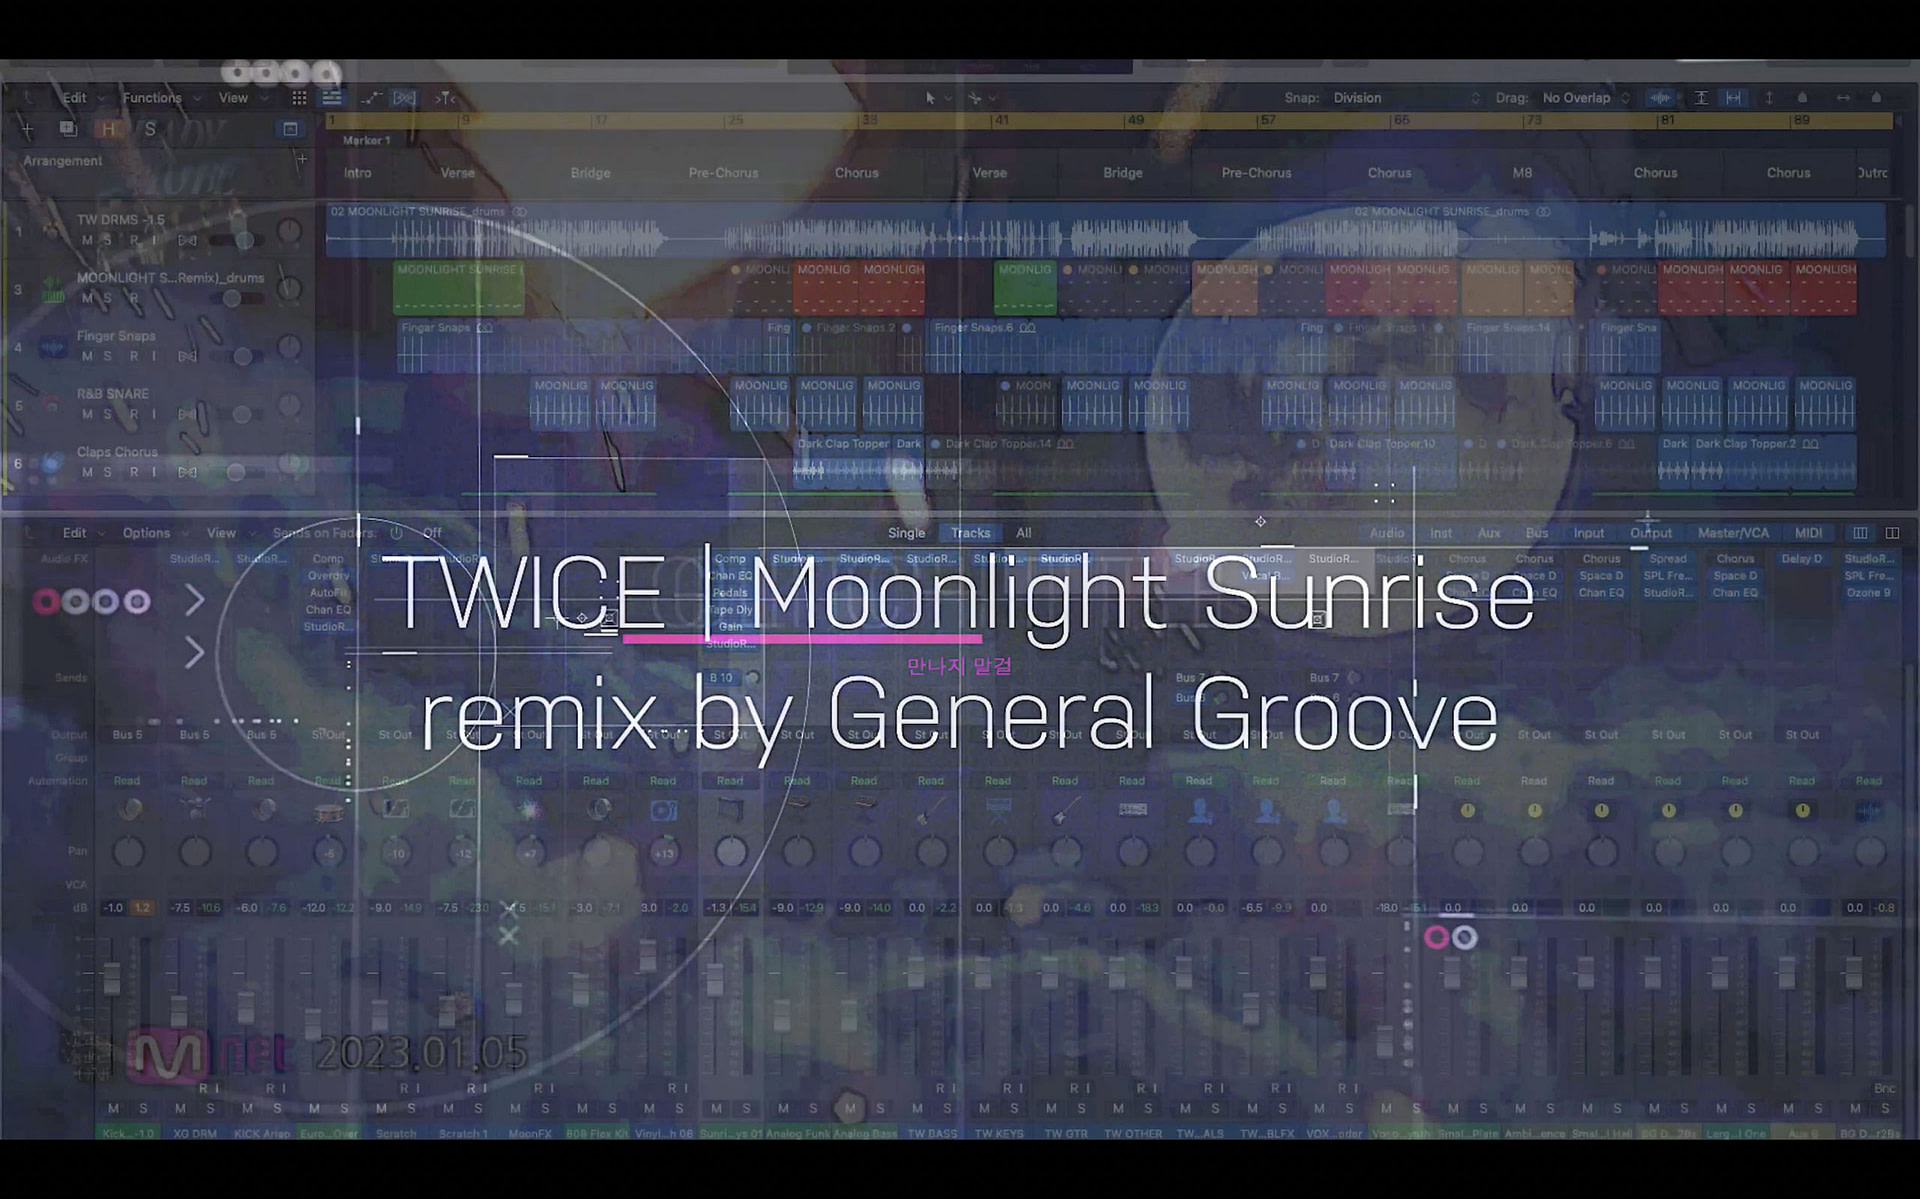 TWICE Moonlight Sunshine General Groove remix